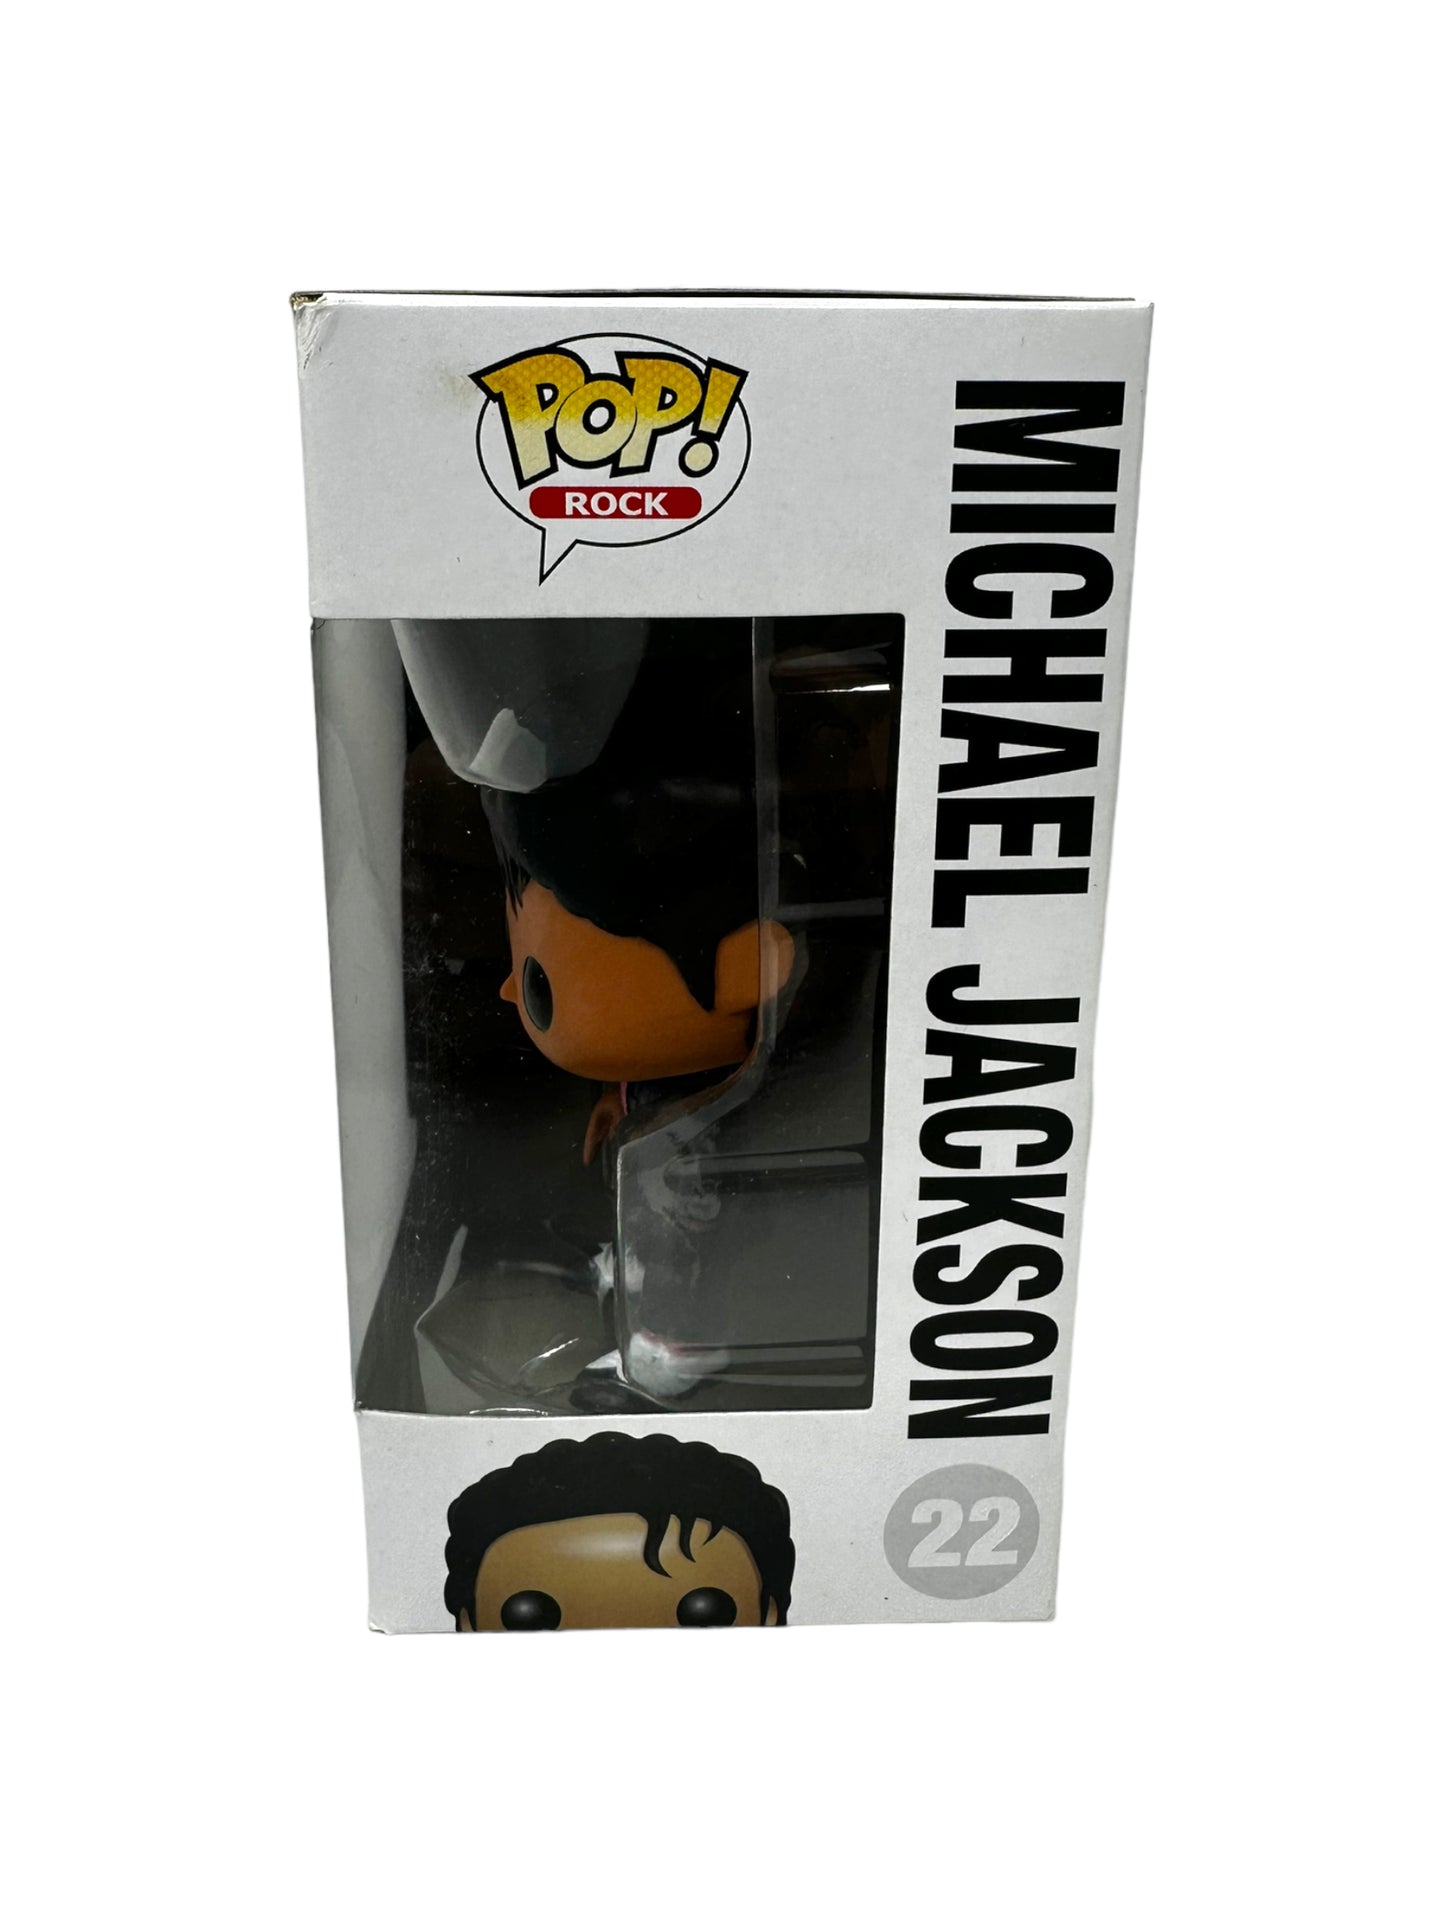 Sold 9/25 2011 Michael Jackson 22 (Billie Jean)